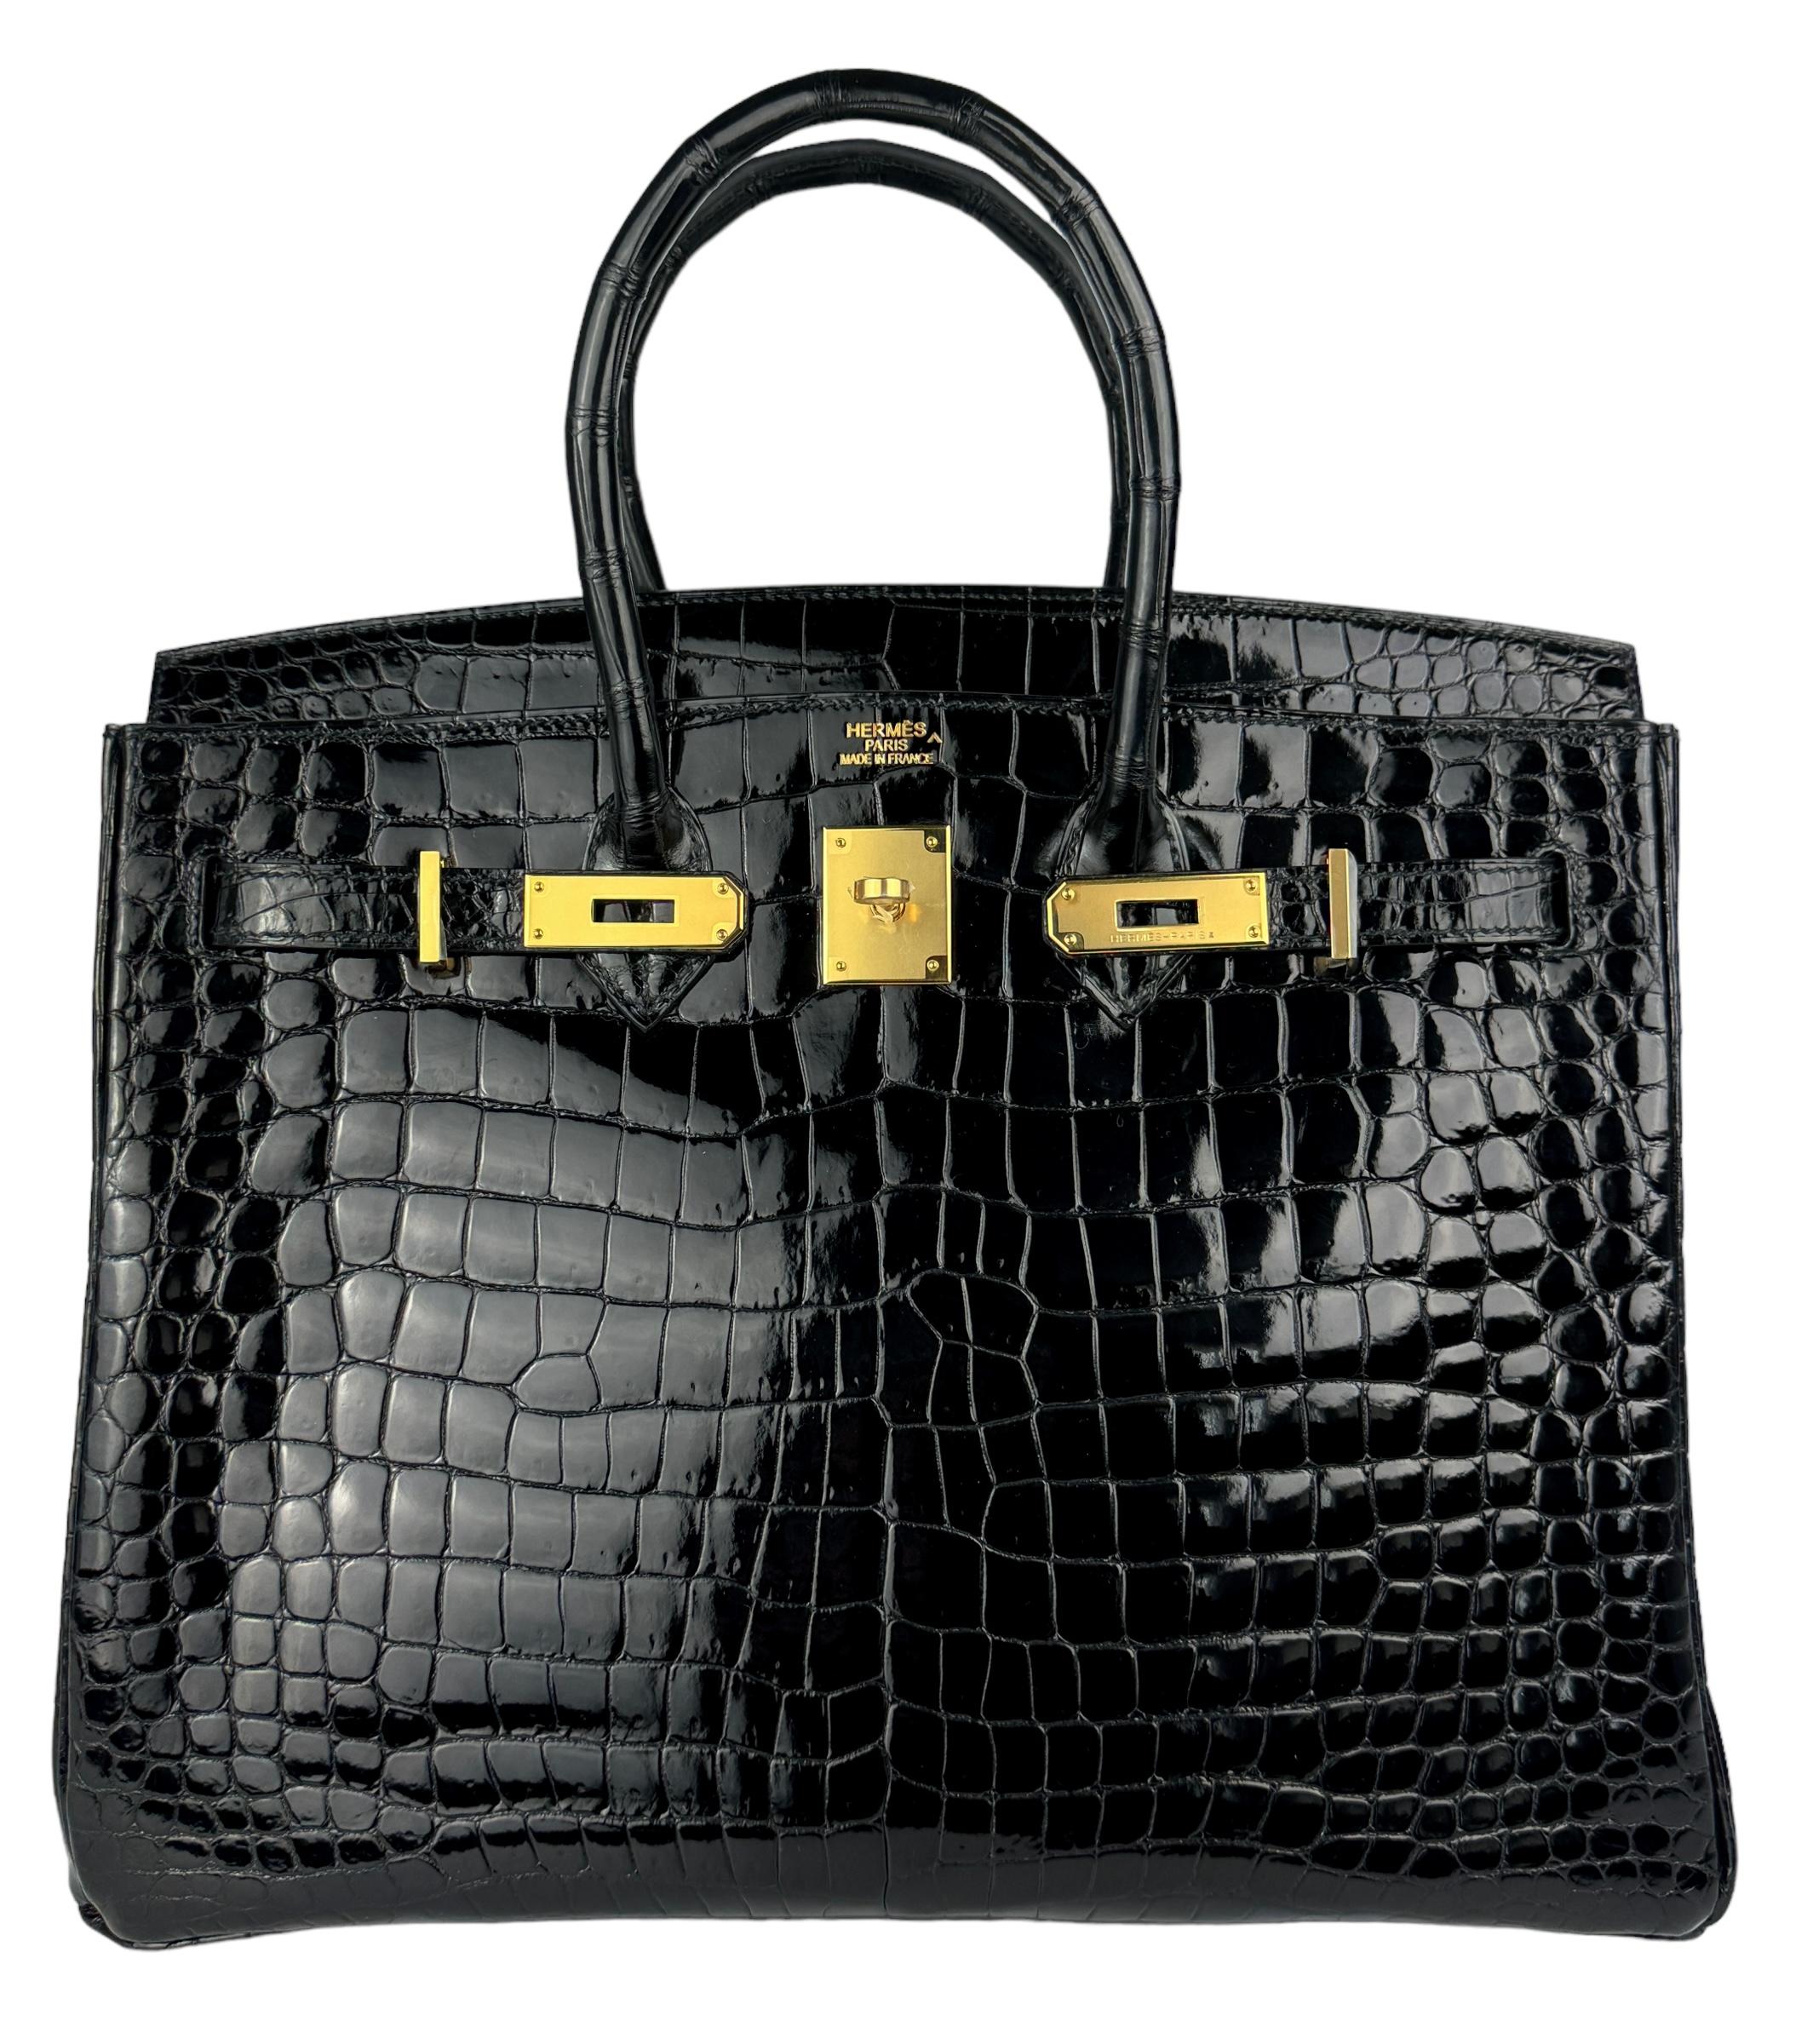 Hermes Birkin 35 Black Noir Crocodile Shinny Porosus Leather Gold Hardware In Excellent Condition For Sale In Miami, FL